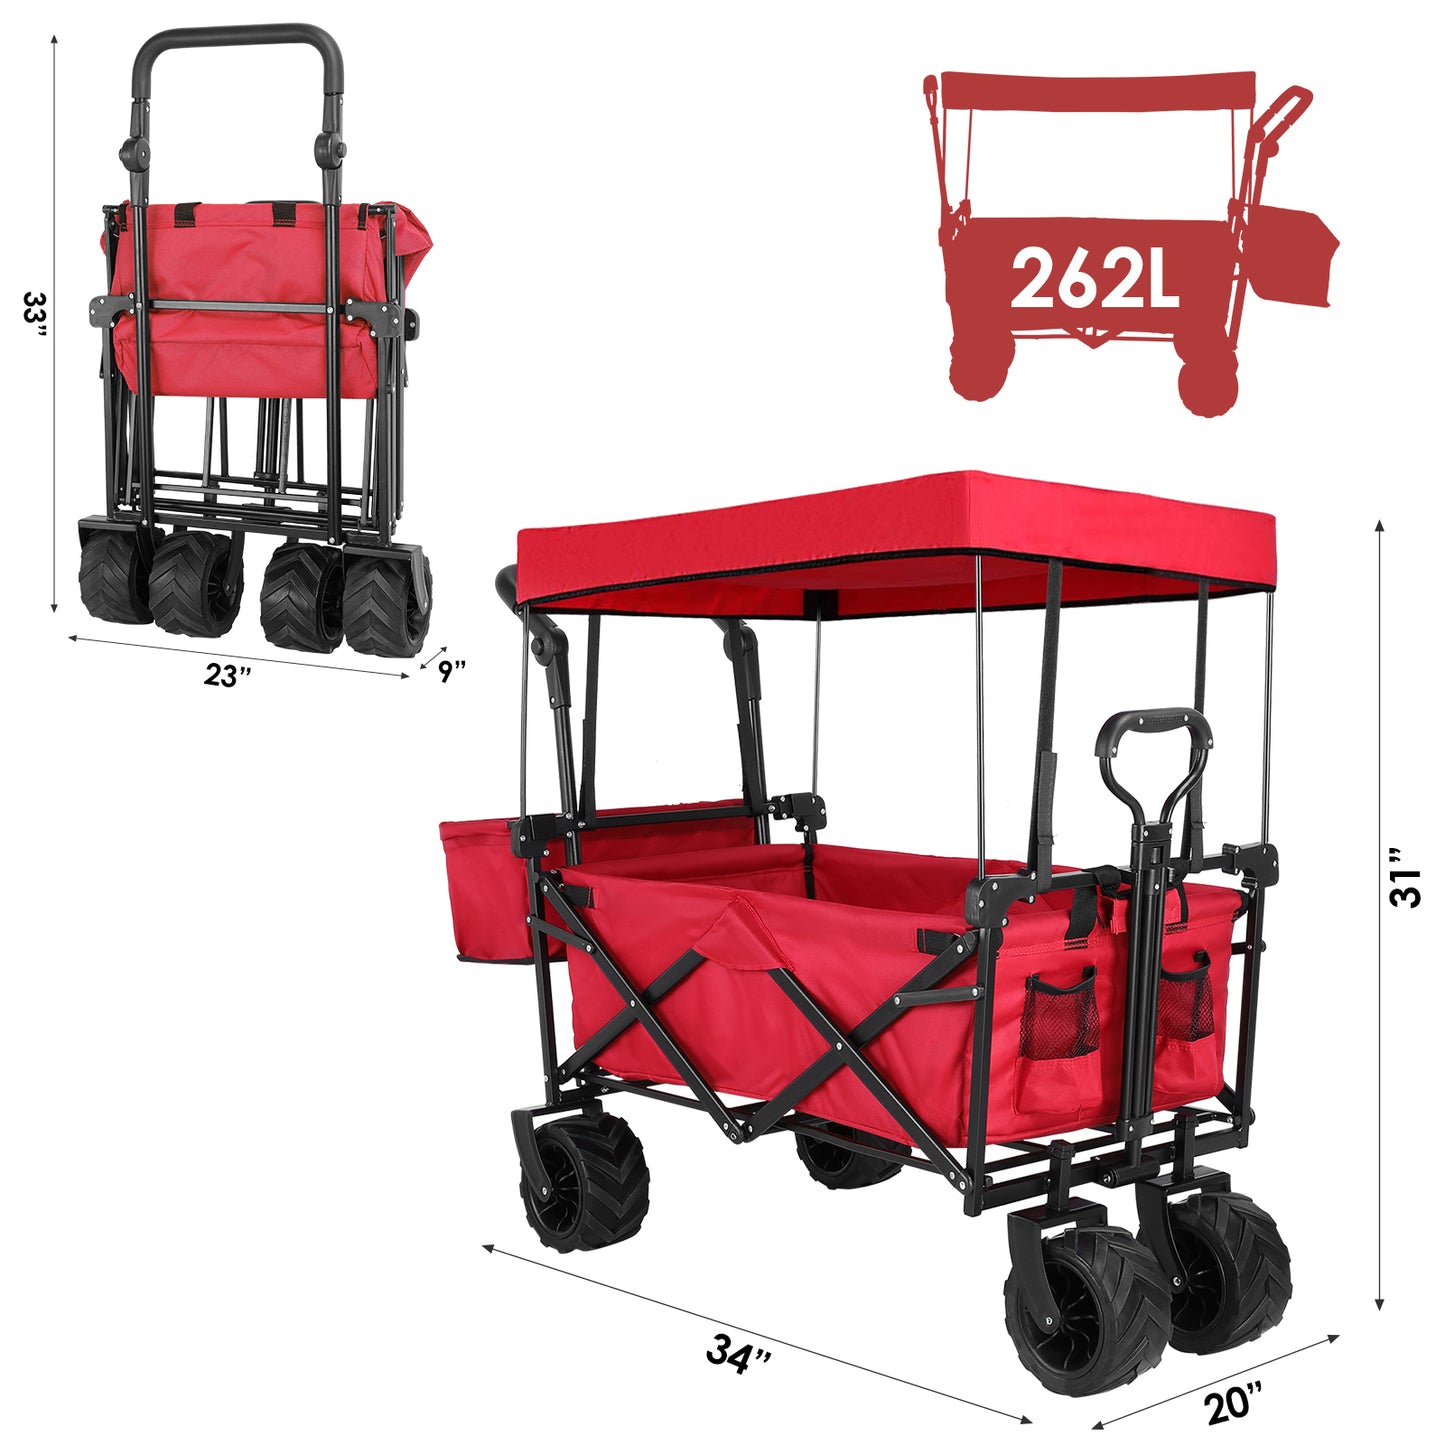 Arlopu Collapsible Wagon Folding Garden Cart W/ Canopy and Adjustable Handles